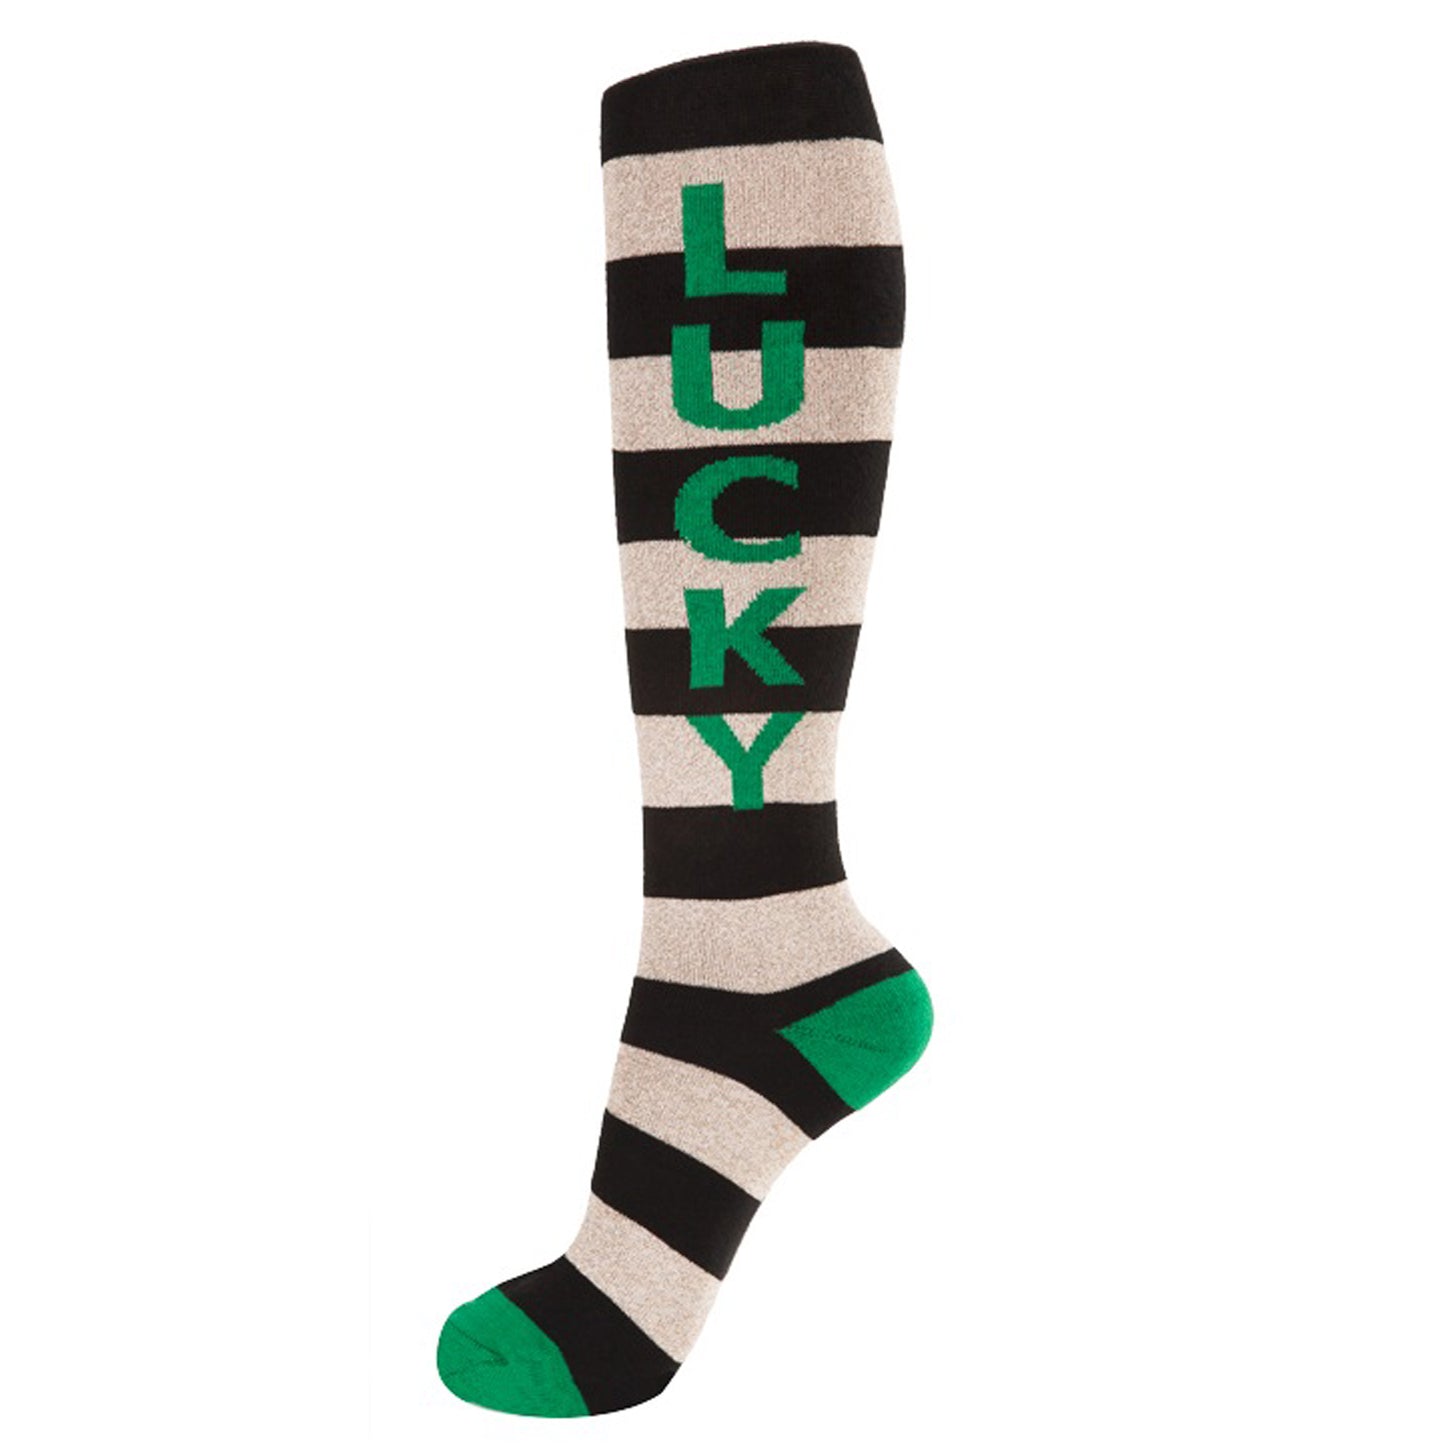 Gumball Poodle Unisex Knee High Socks - Lucky